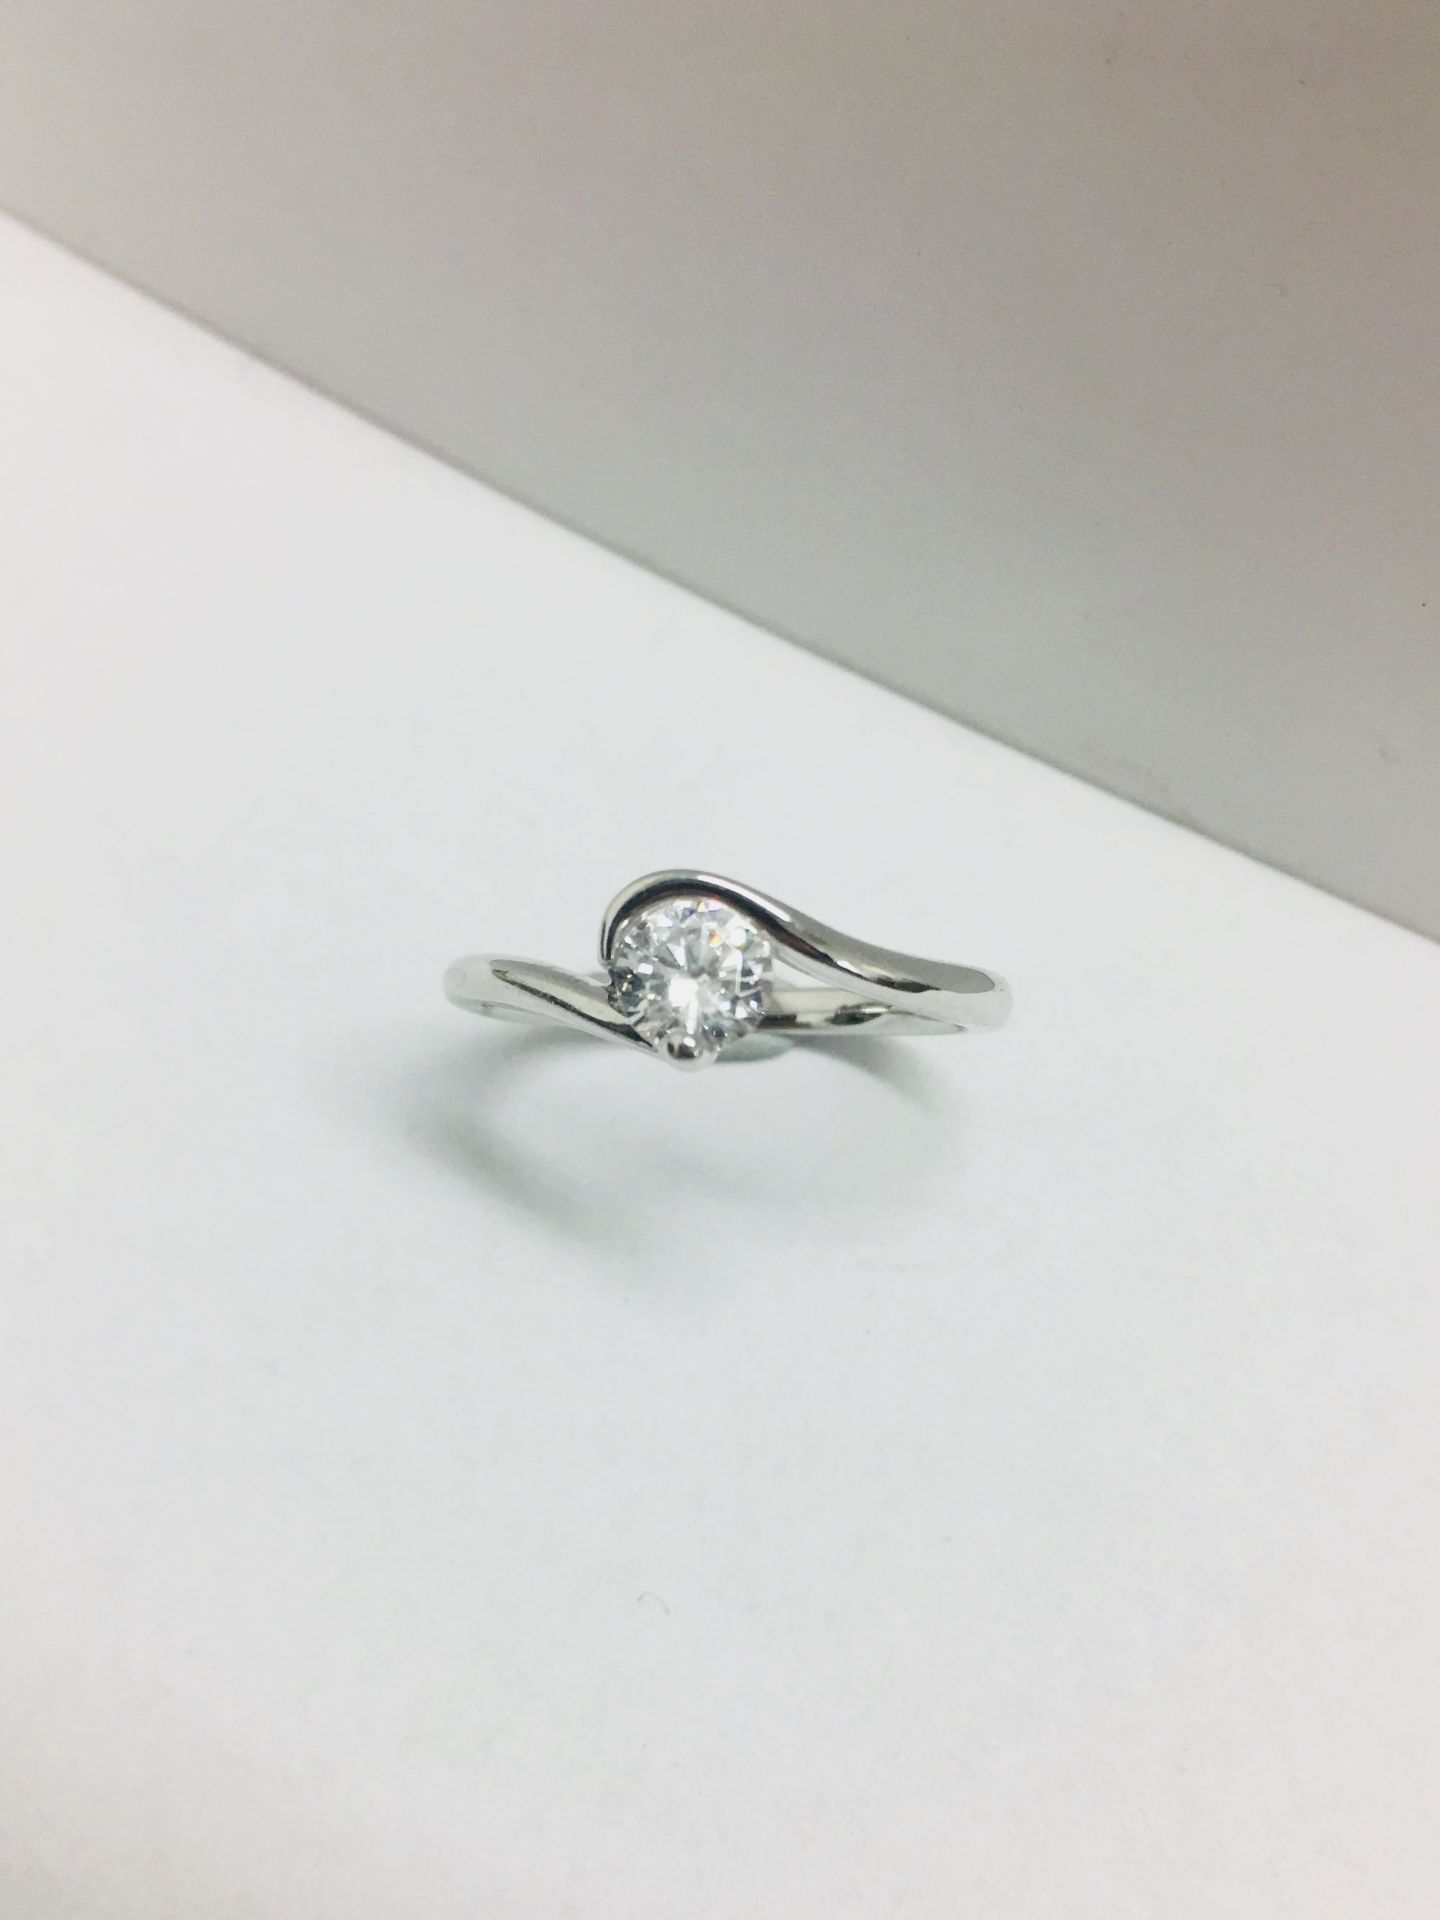 Platinum twist style diamond solitaire ring,0.50ct h colour vs clarity diamond(clarity enhanced),4. - Image 3 of 6